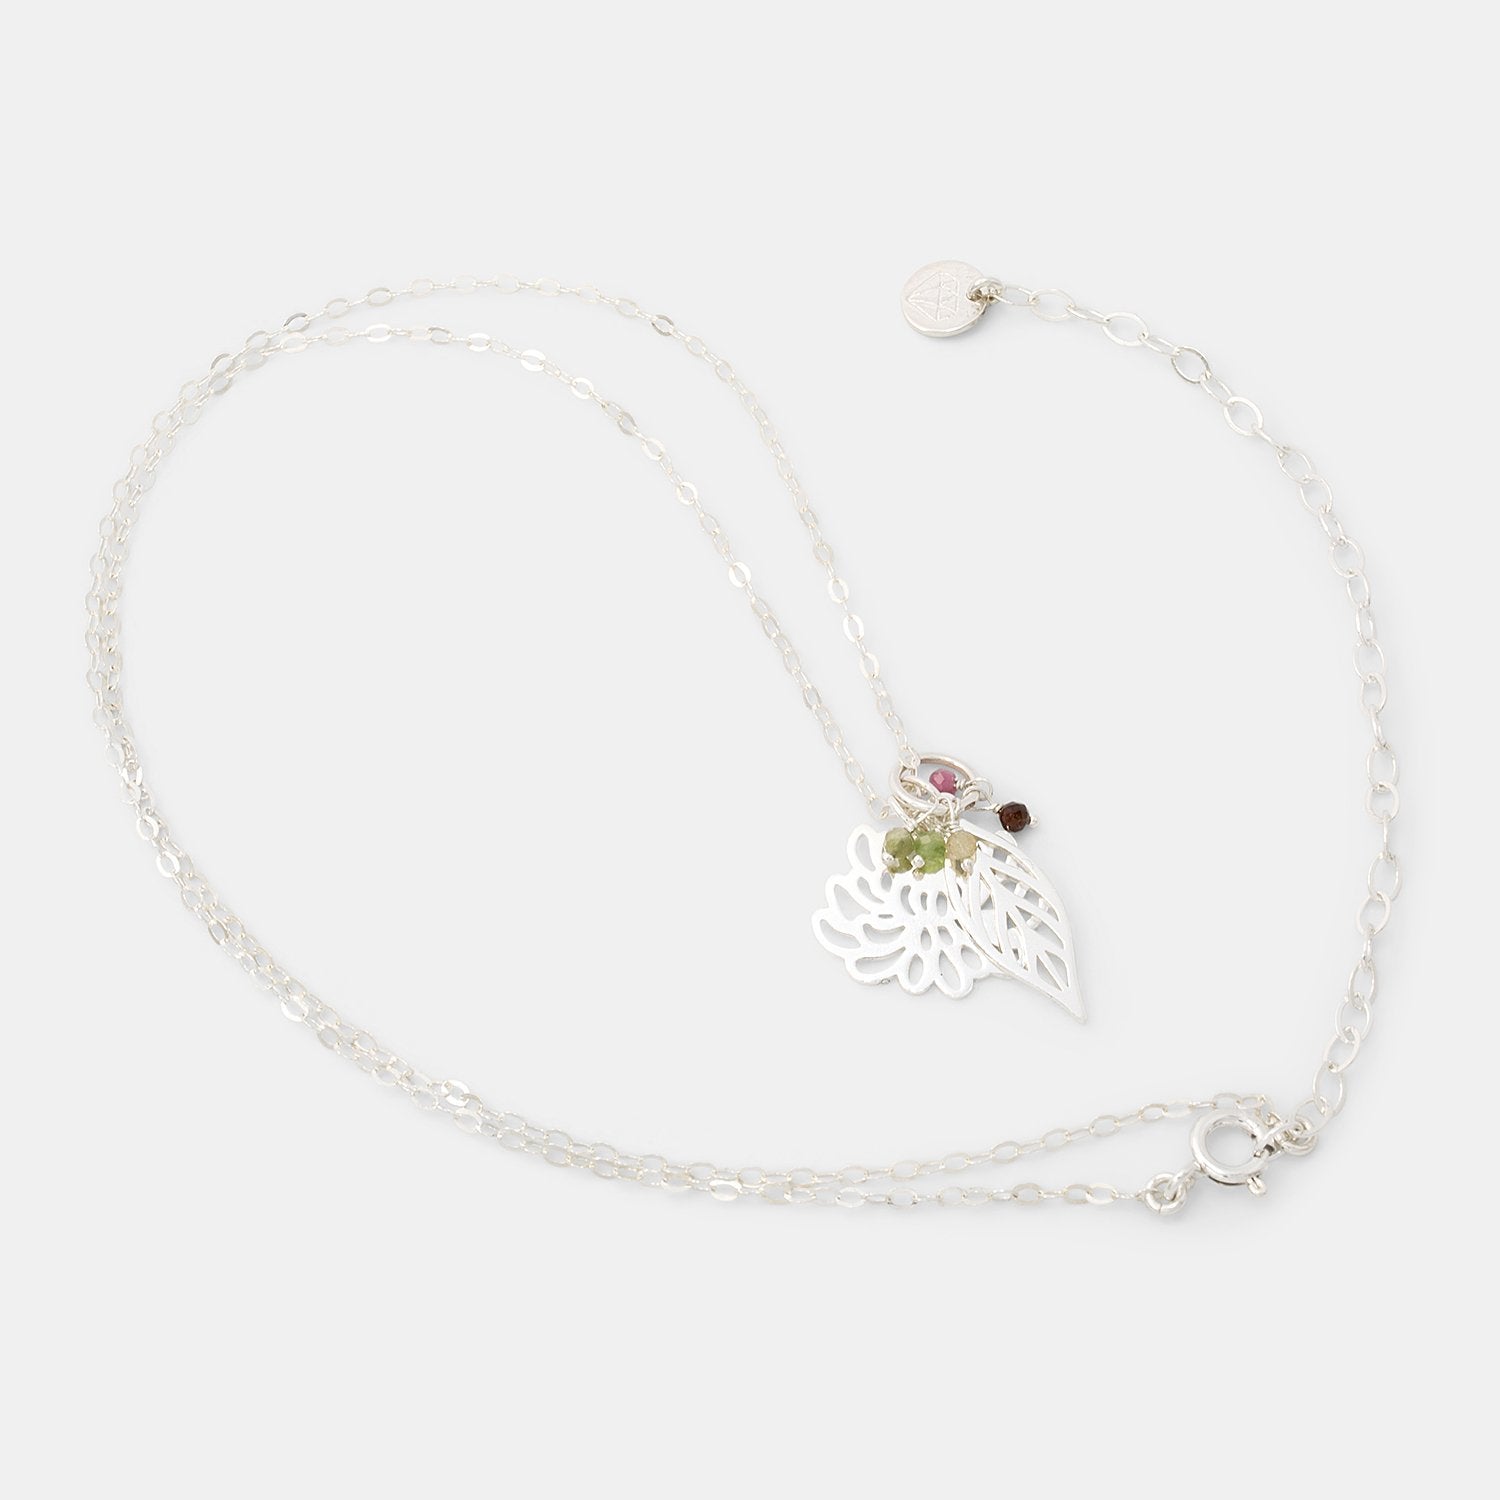 Chrysanthemum, leaf & tourmaline necklace - Simone Walsh Jewellery Australia